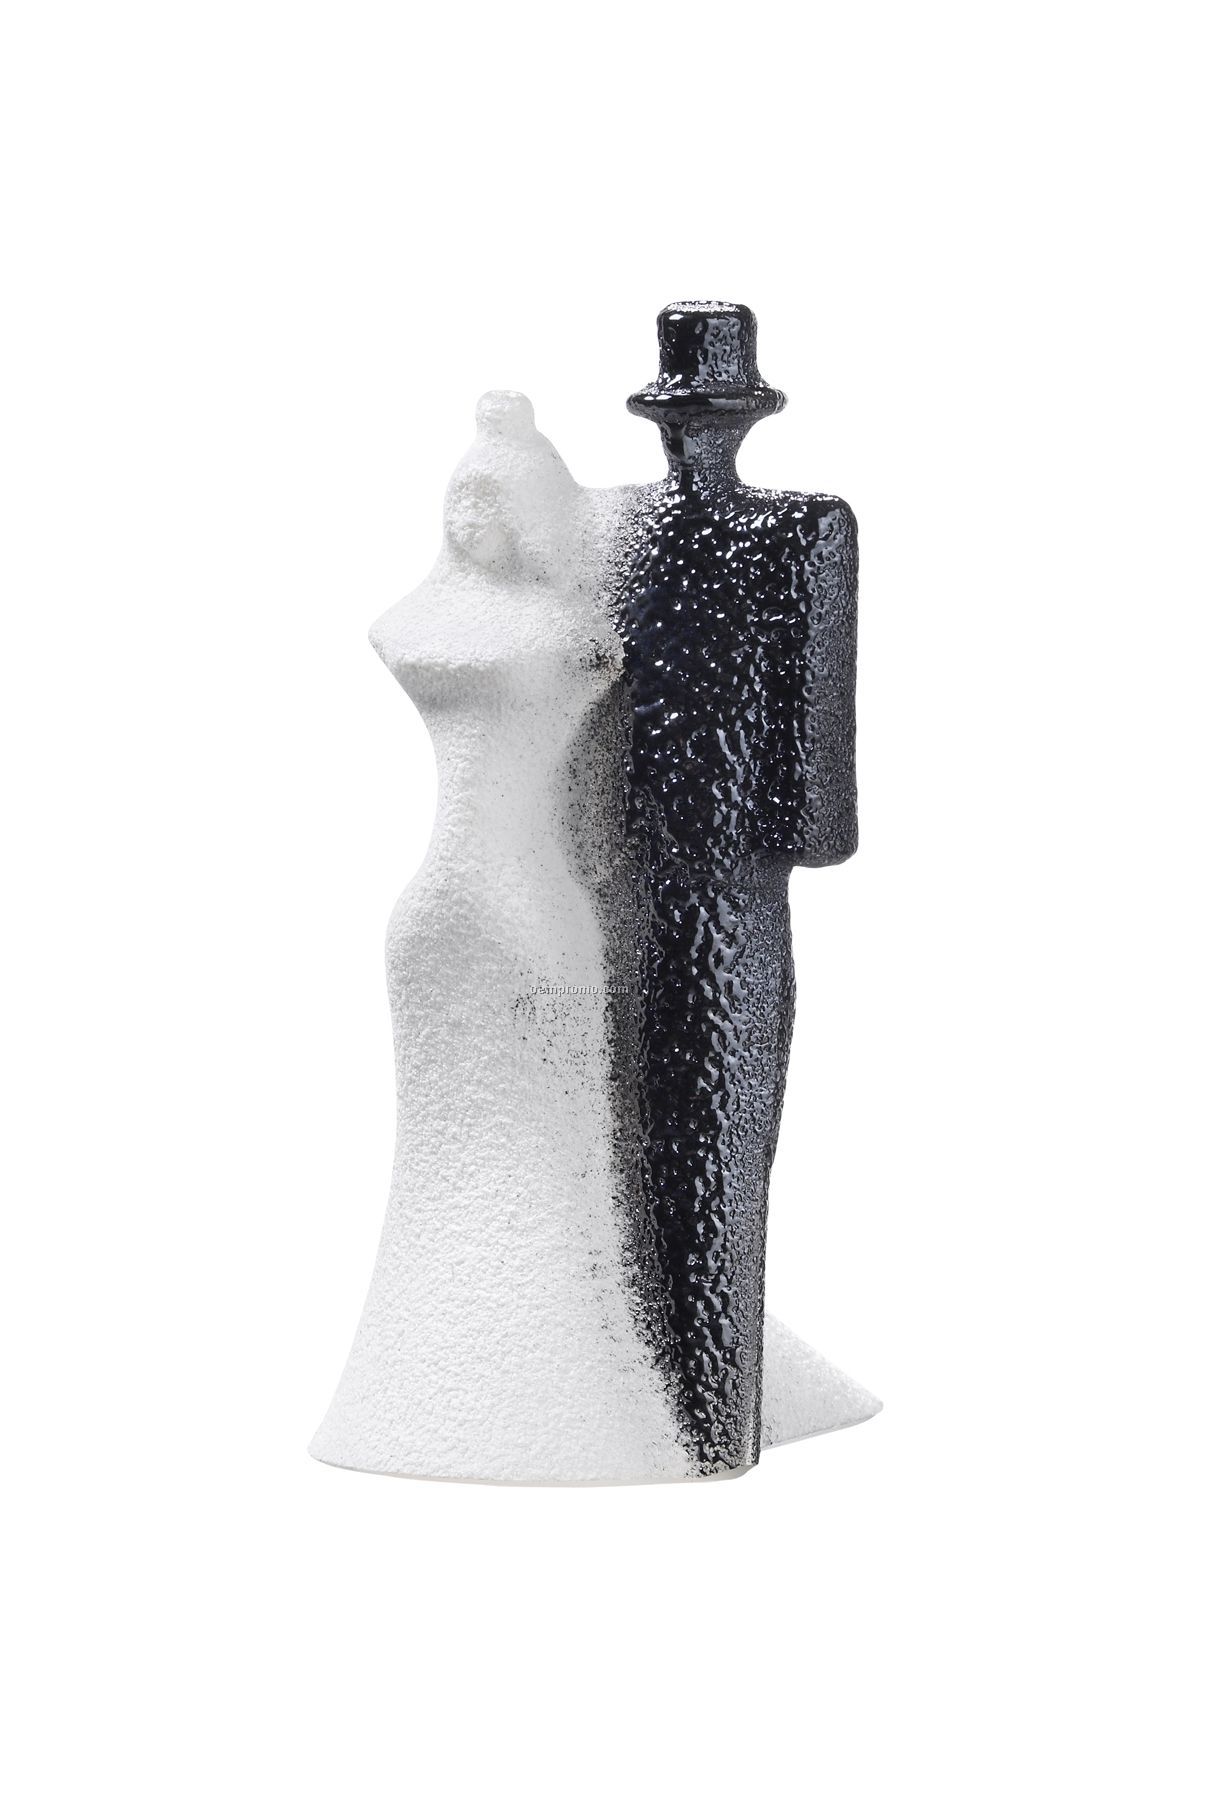 Catwalk Bridal Couple Glass Sculpture By Kjell Engman